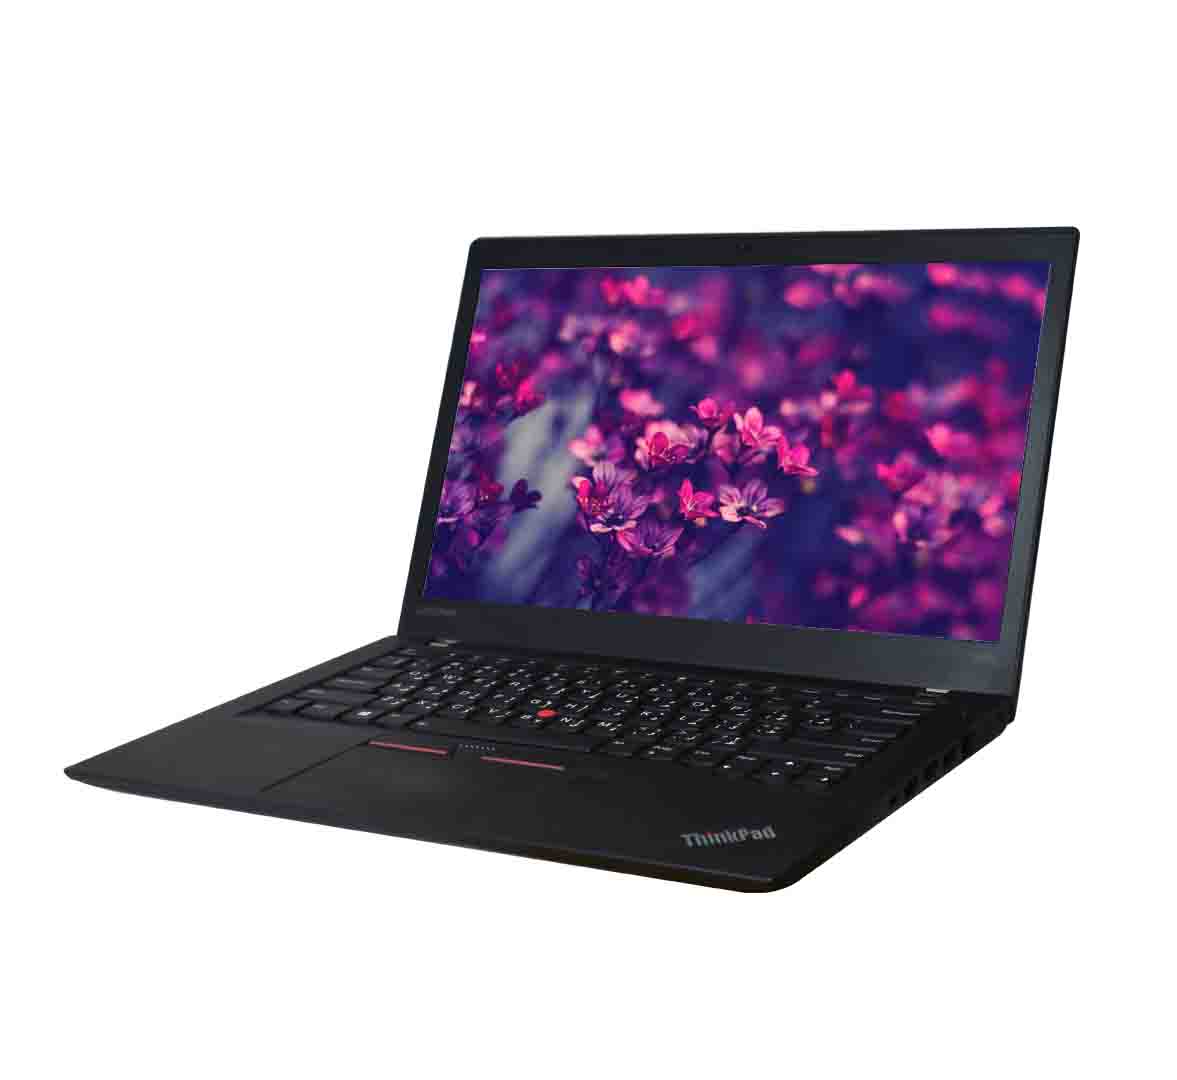 Lenovo ThinkPad T480s Business Laptop, Intel Core i7-8th Generation CPU, 8GB RAM, 256GB SSD, 14 inch Display, Windows 10 Pro